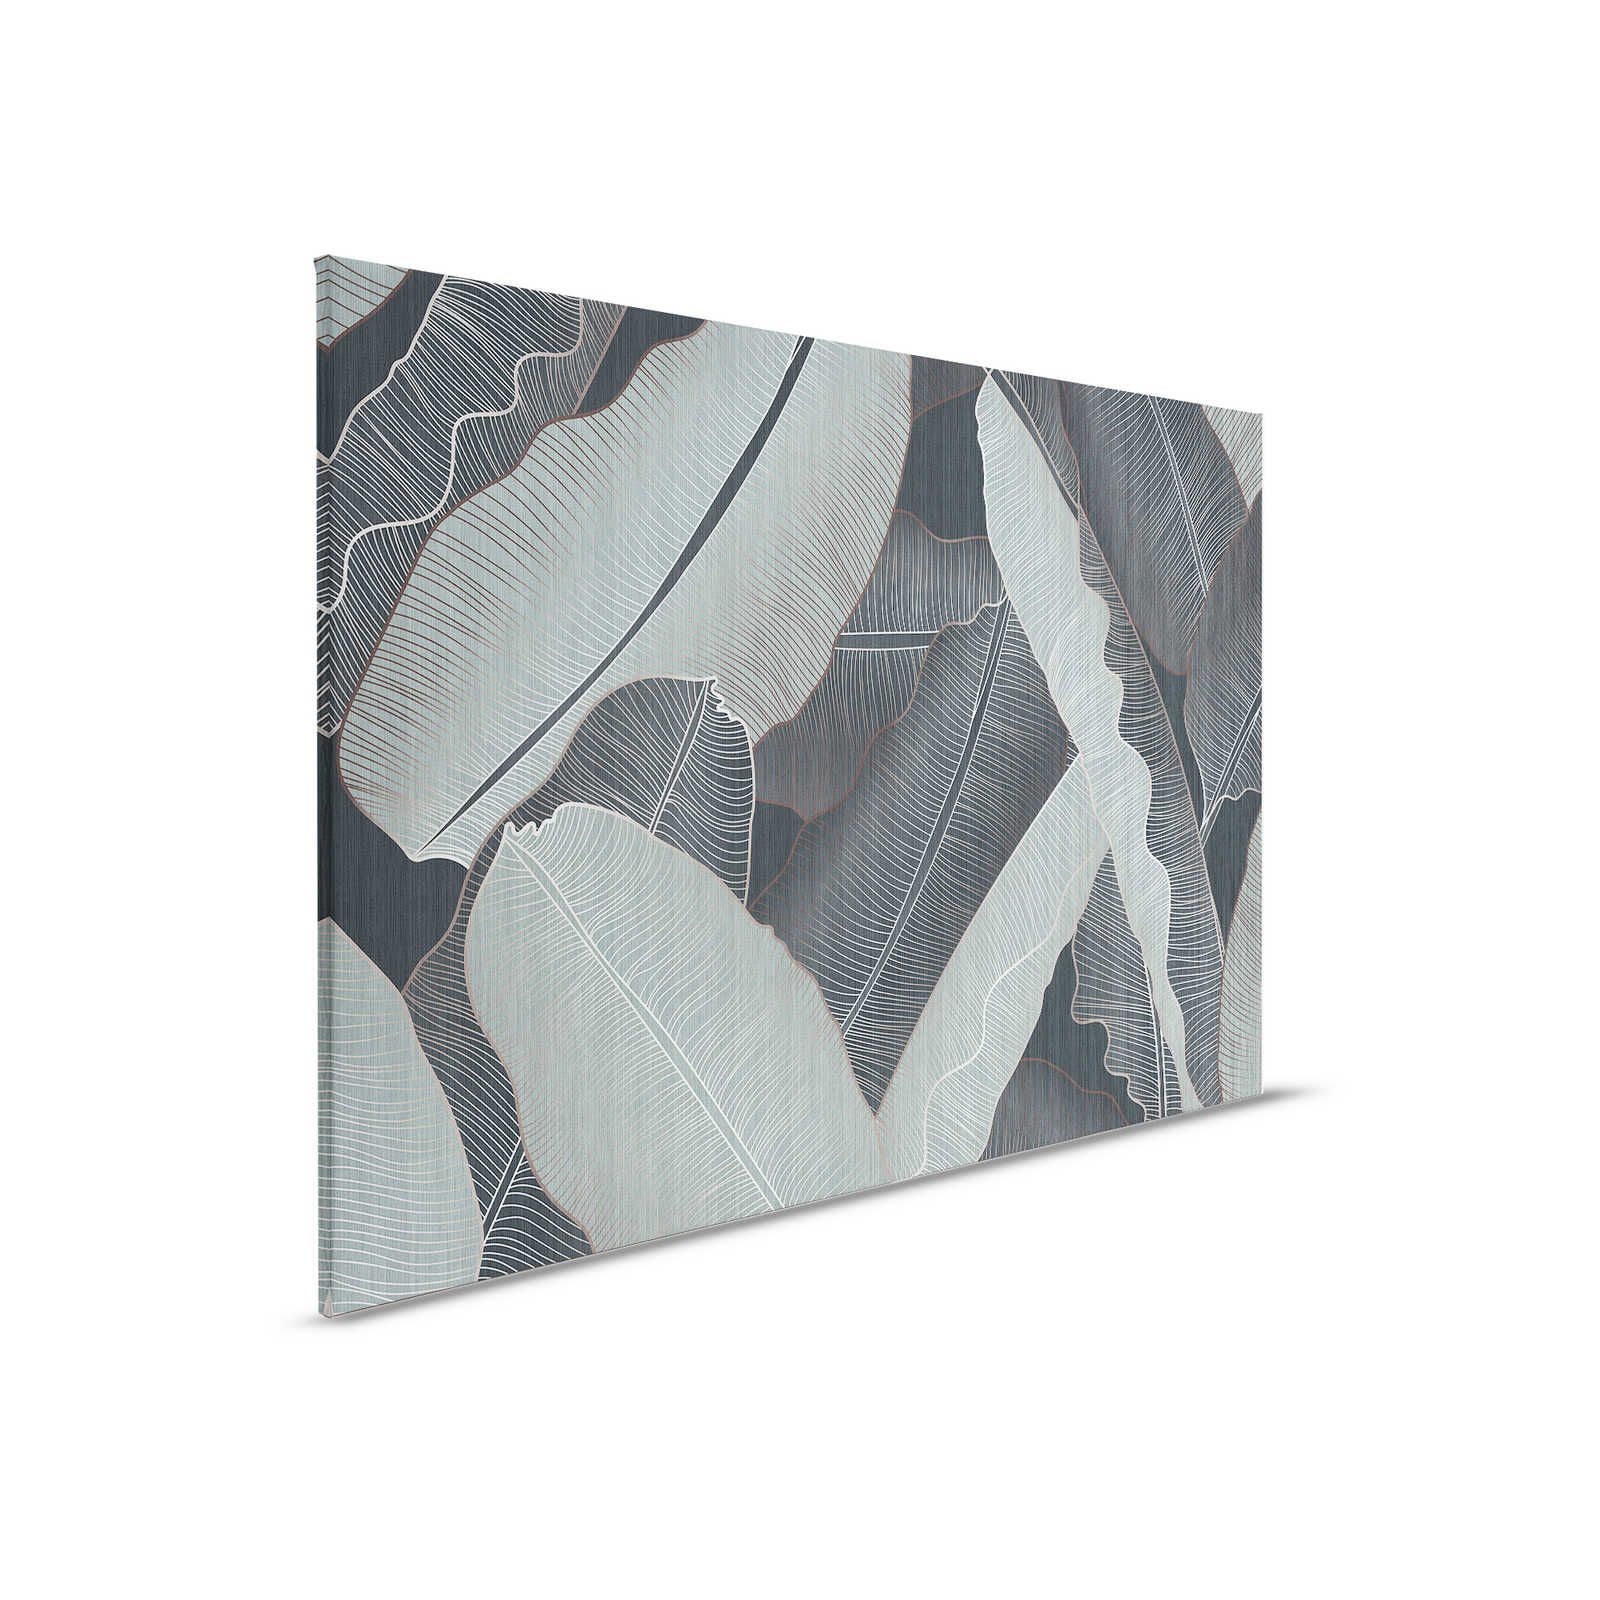 Under Cover 1 - Palm Leaf Canvas Schilderij Grijs & Lichtgroen Tekenstijl - 0.90 m x 0.60 m
